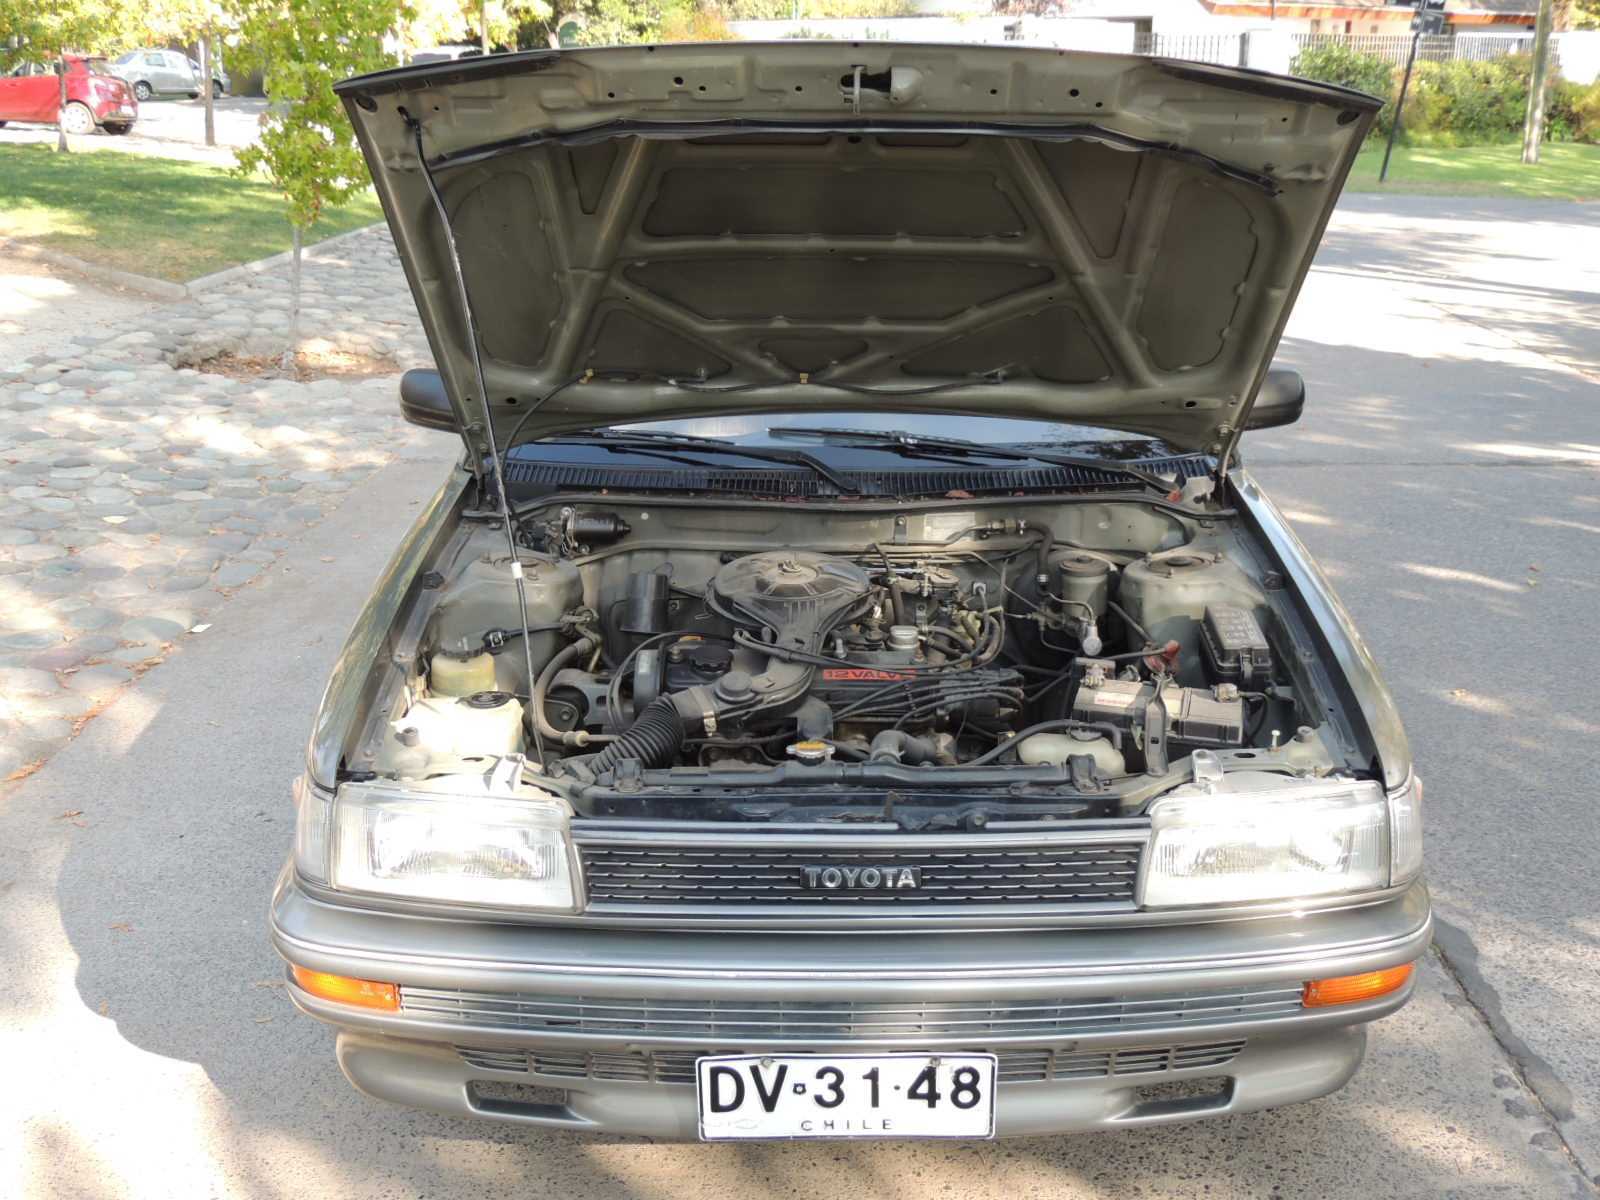 Toyota Corolla 1992 Flaco Farias Retrotest (31)